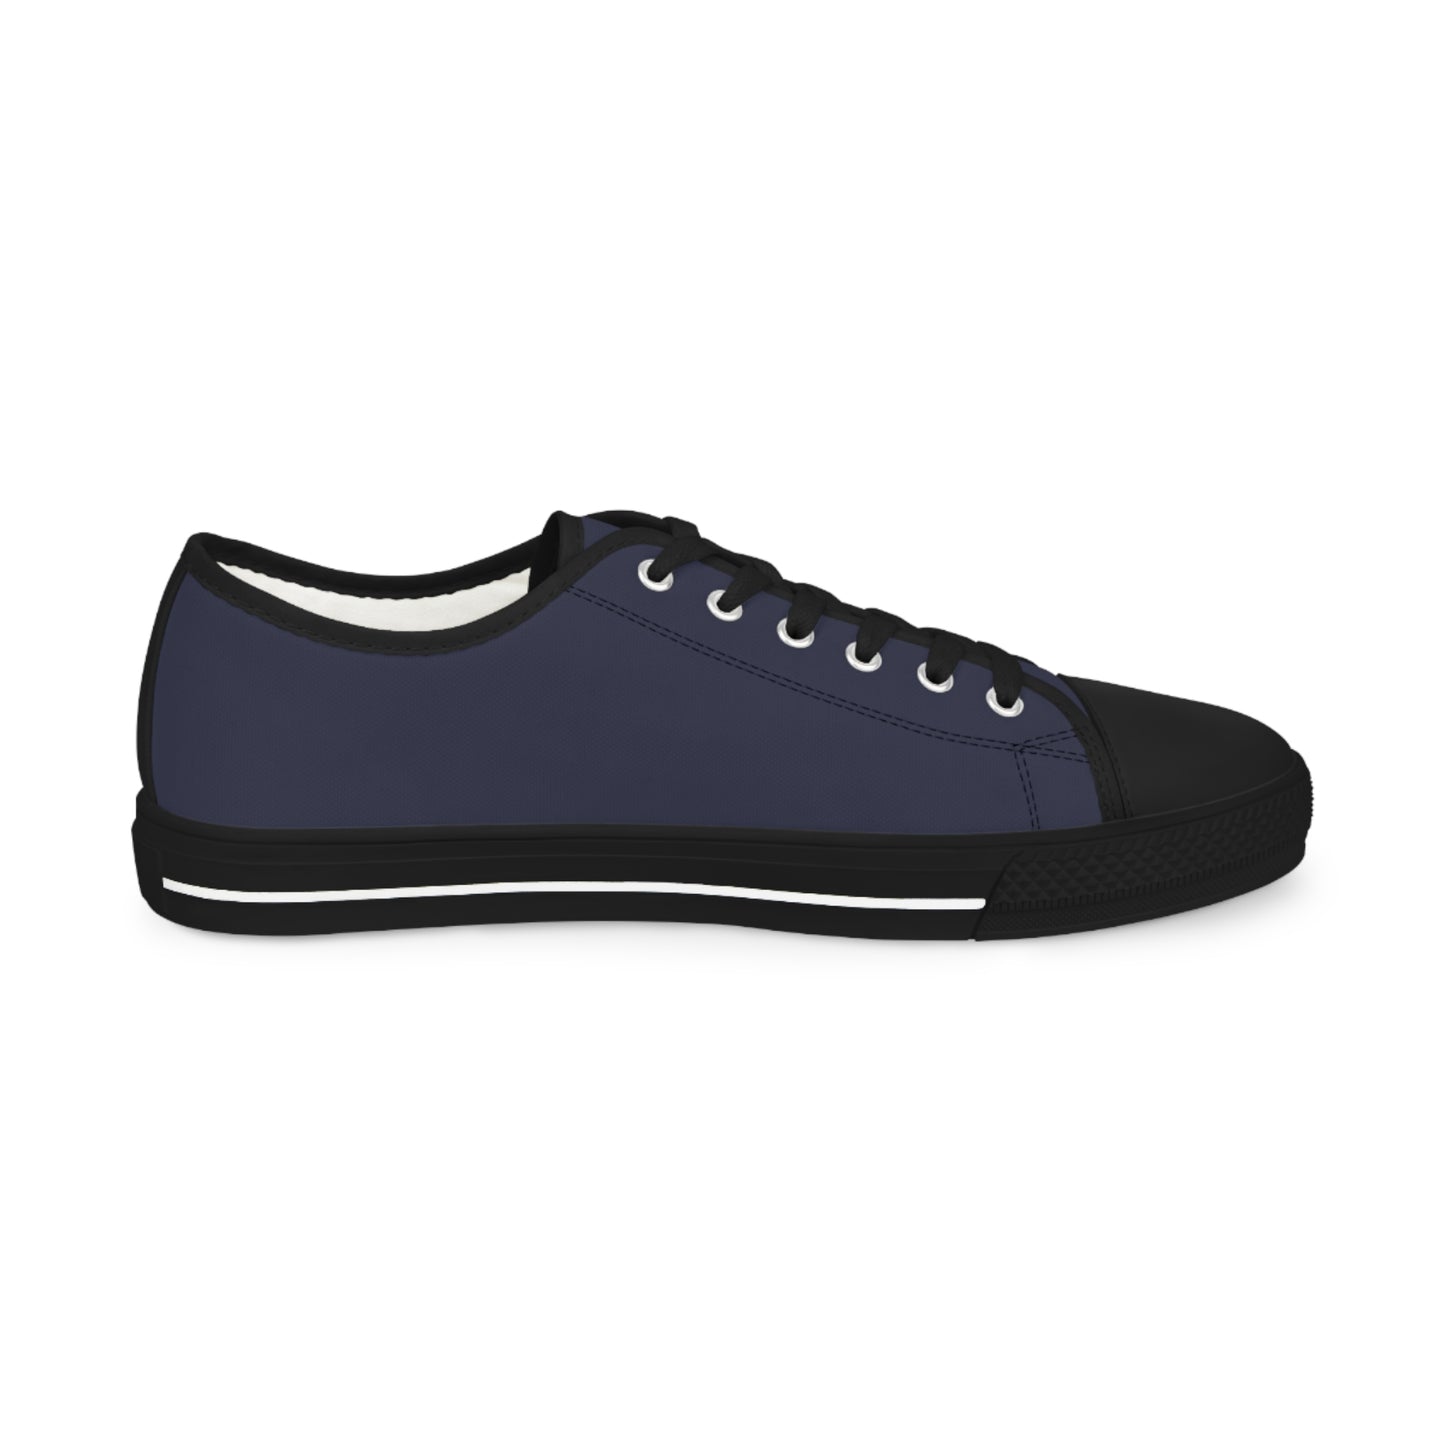 Men's Canvas Low Top Solid Color Sneakers - Dusty Purple US 14 Black sole